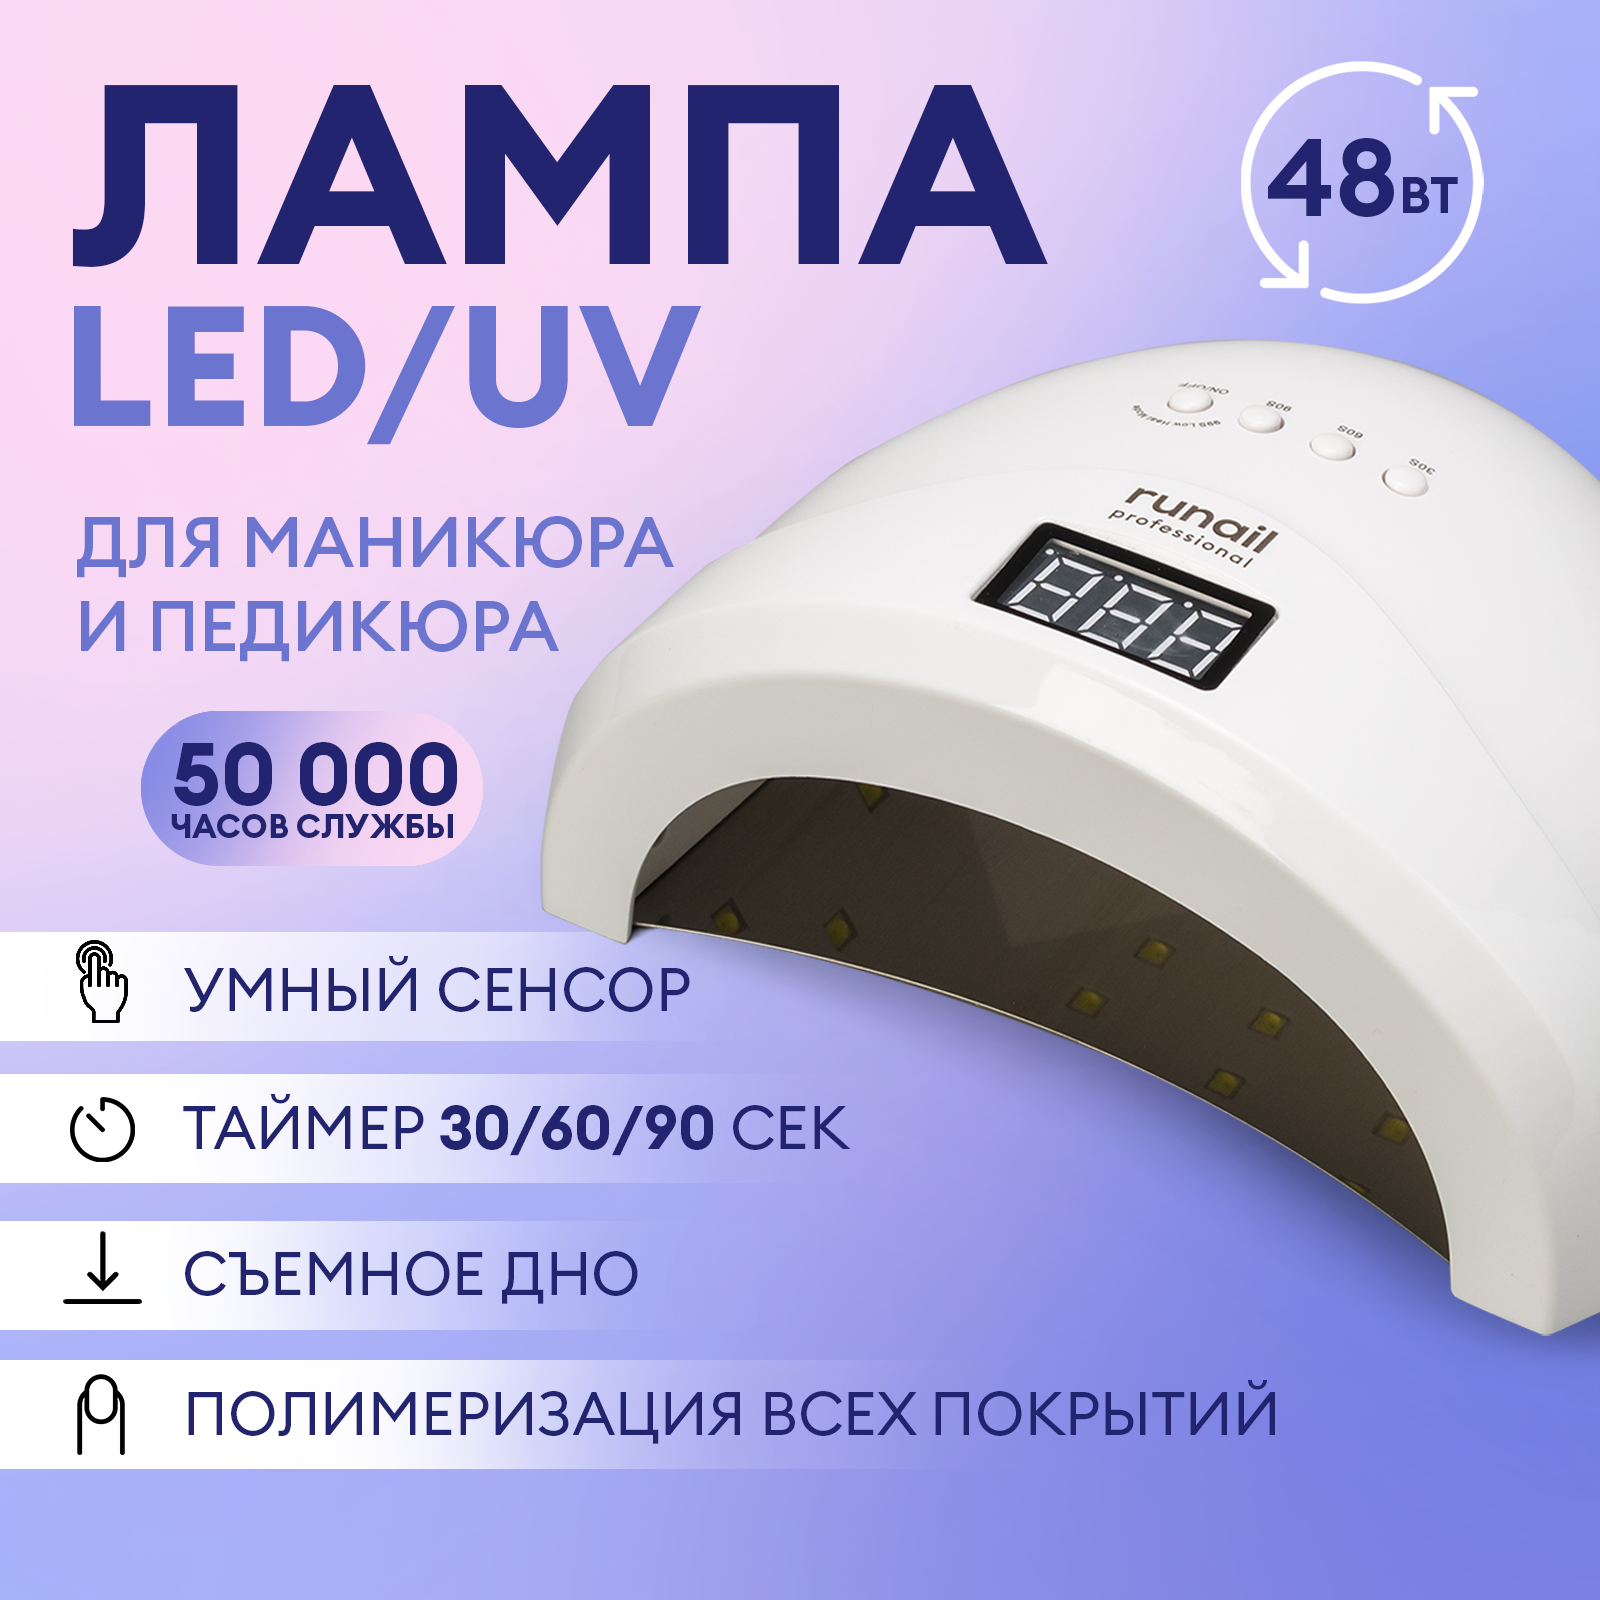 Лампа LED/UV для маникюра и педикюра 48Вт runail professional №3837